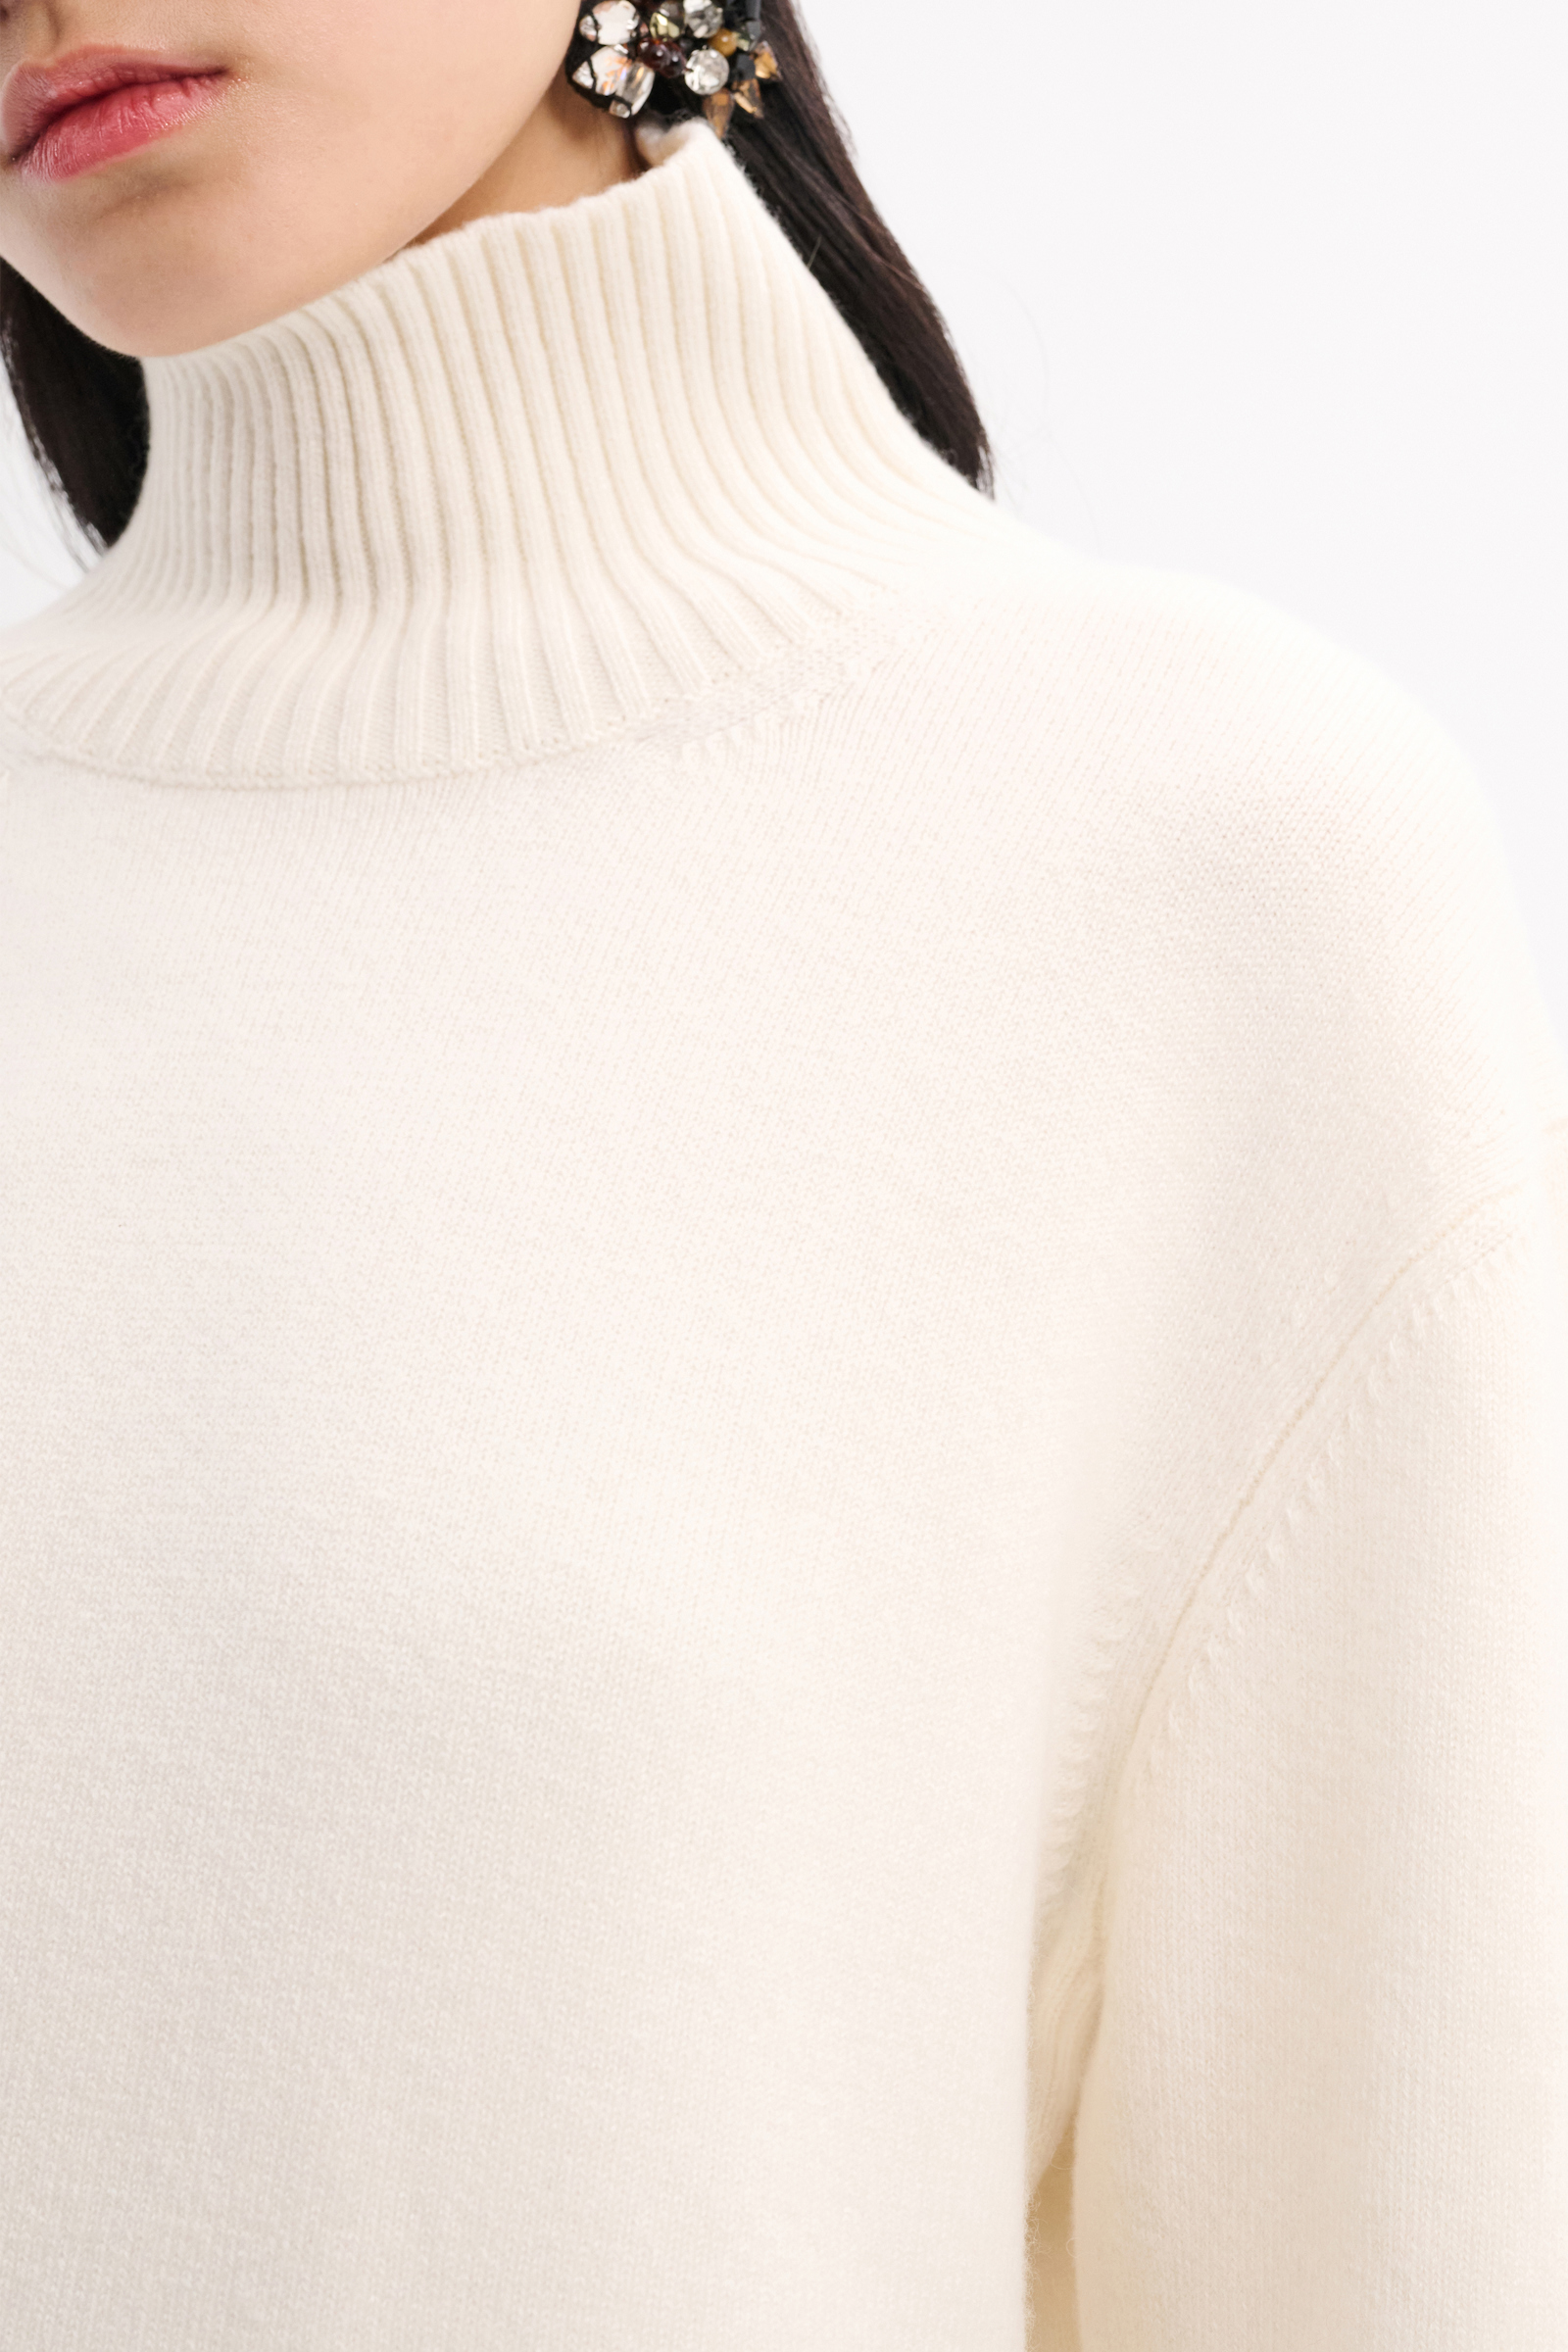 Dorothee Schumacher Soft cashmere mix knit turtleneck cozy white